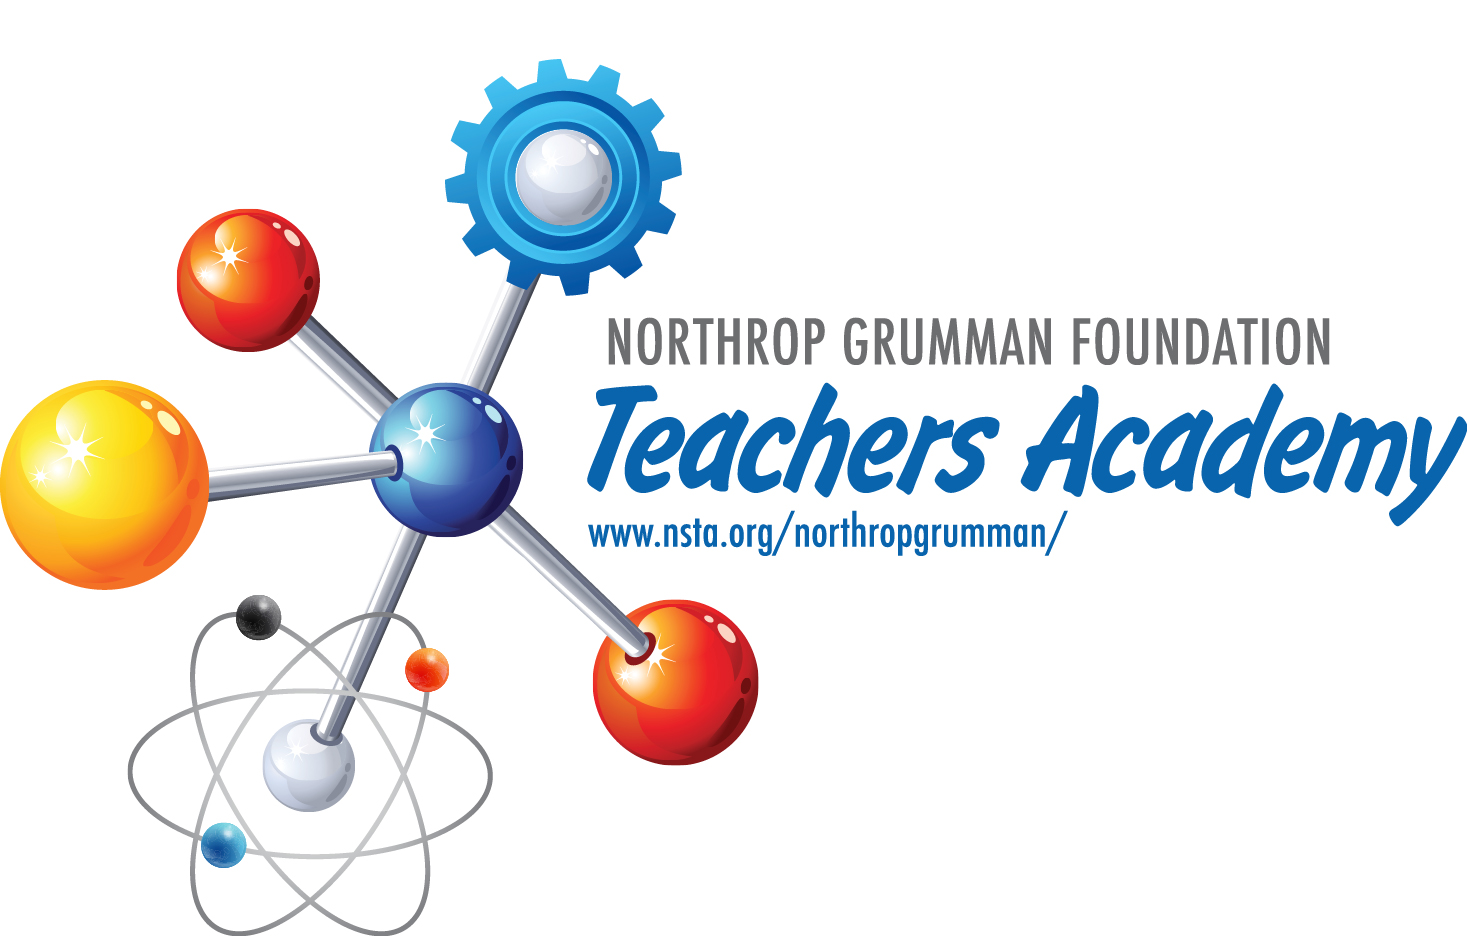 Northrop Grumman Foundation Teachers Academy - Logo - https://s39939.pcdn.co/wp-content/uploads/2018/11/Corporate-Community-or-Nonprofit-Partnership.jpg